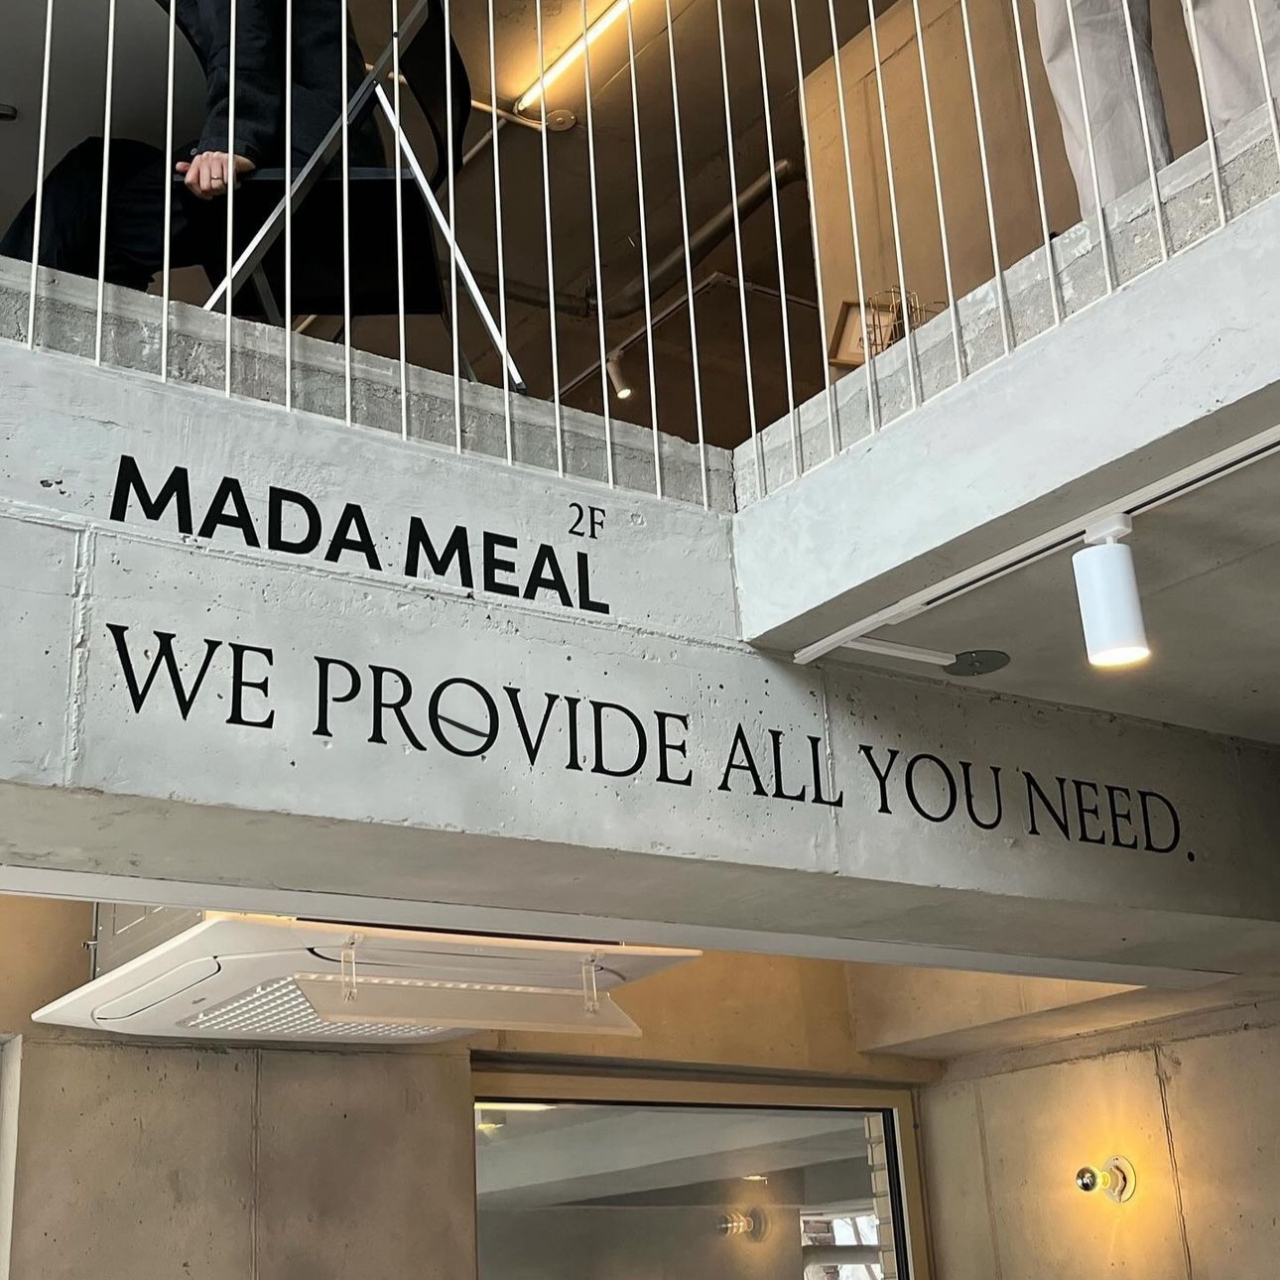 Interior of Mada Meal (Mada Meal Instagram)